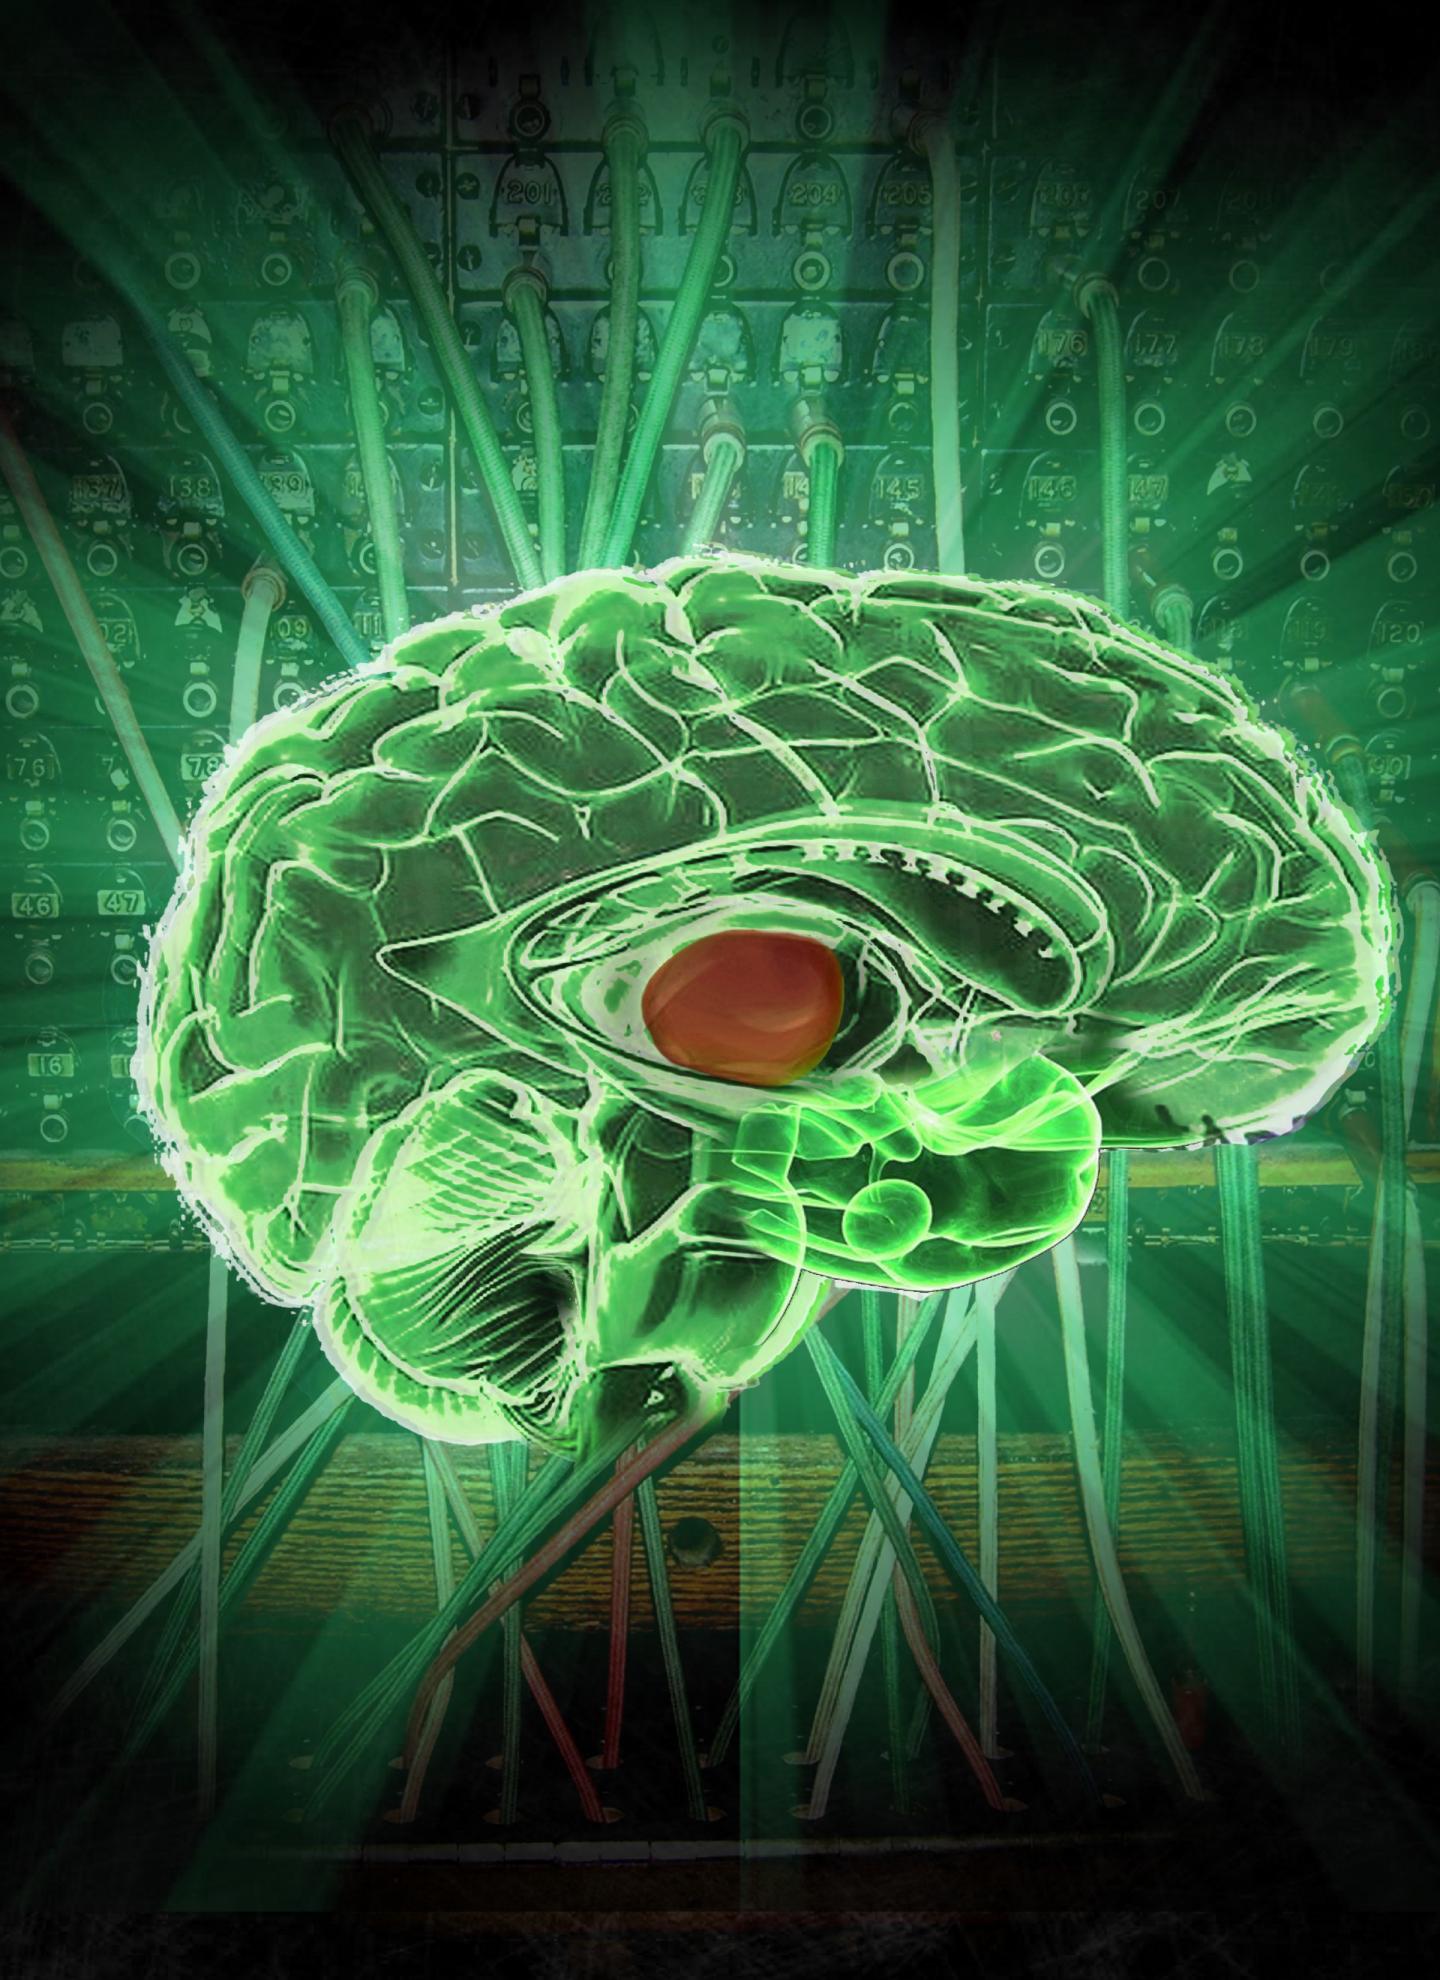 Image of Human Brain